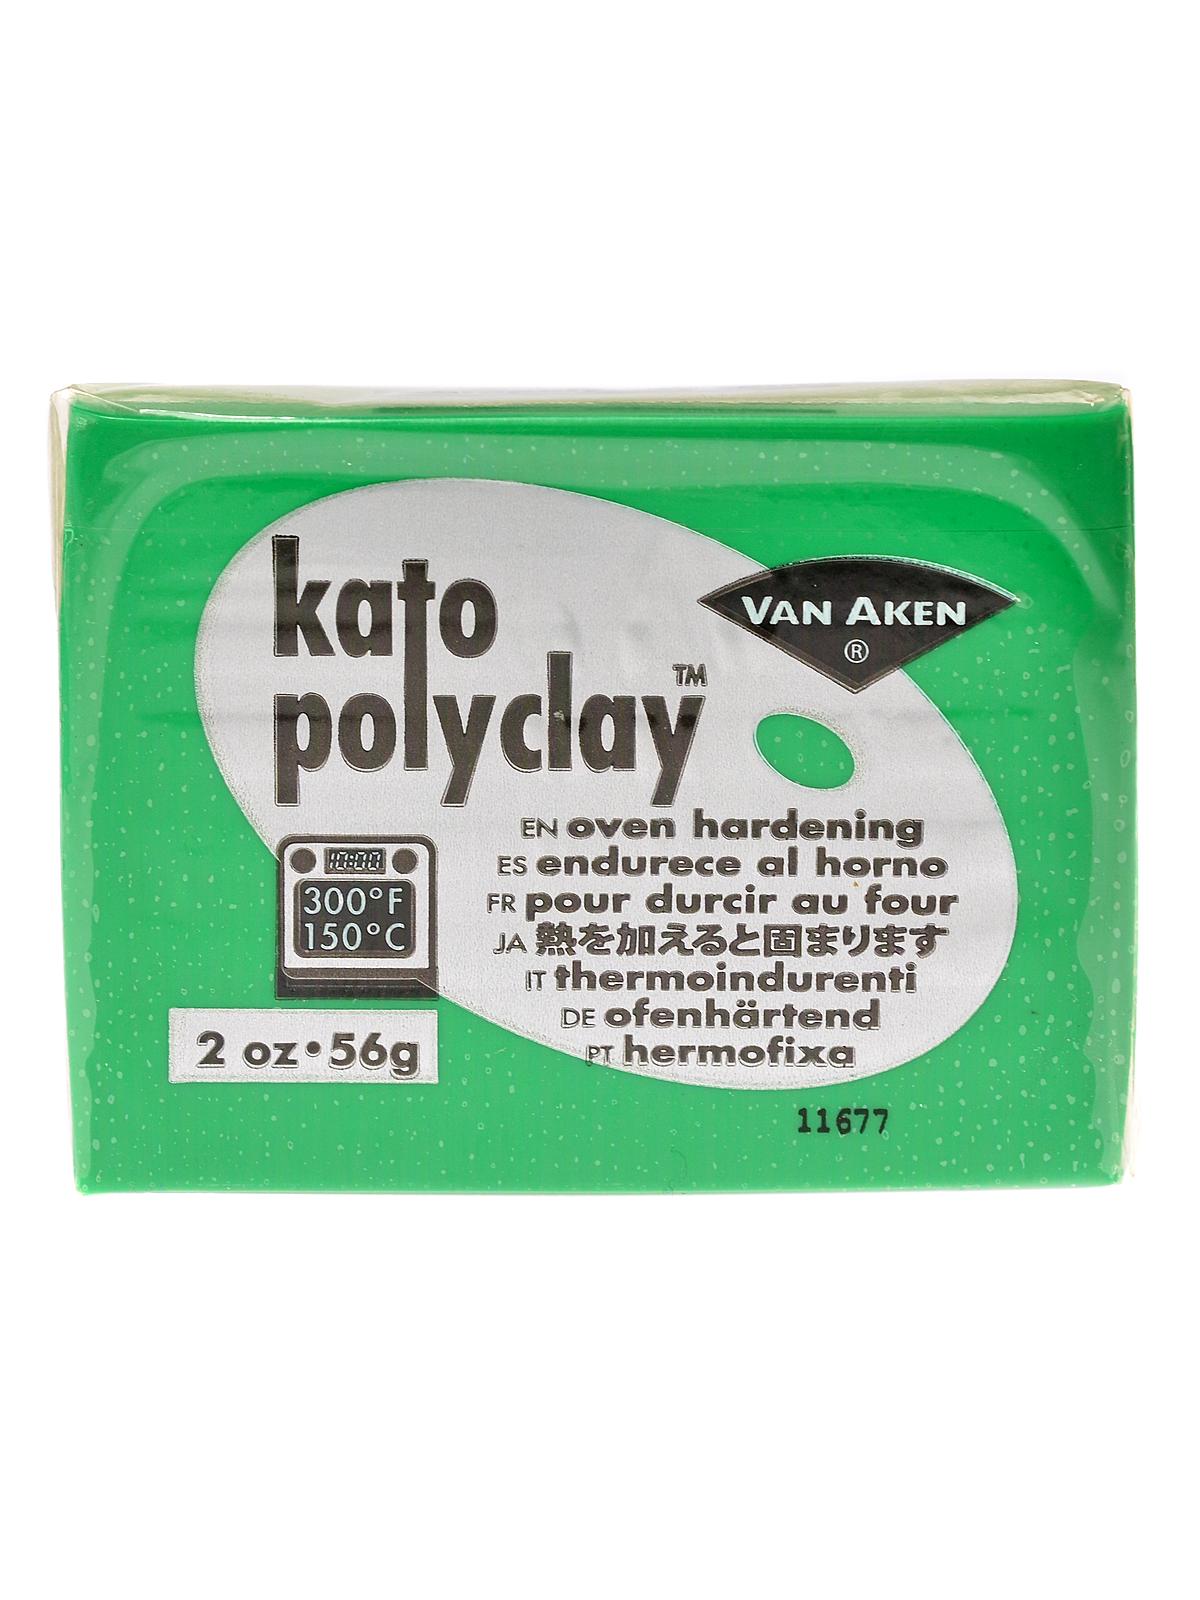 Kato Polyclay Green 2 Oz.